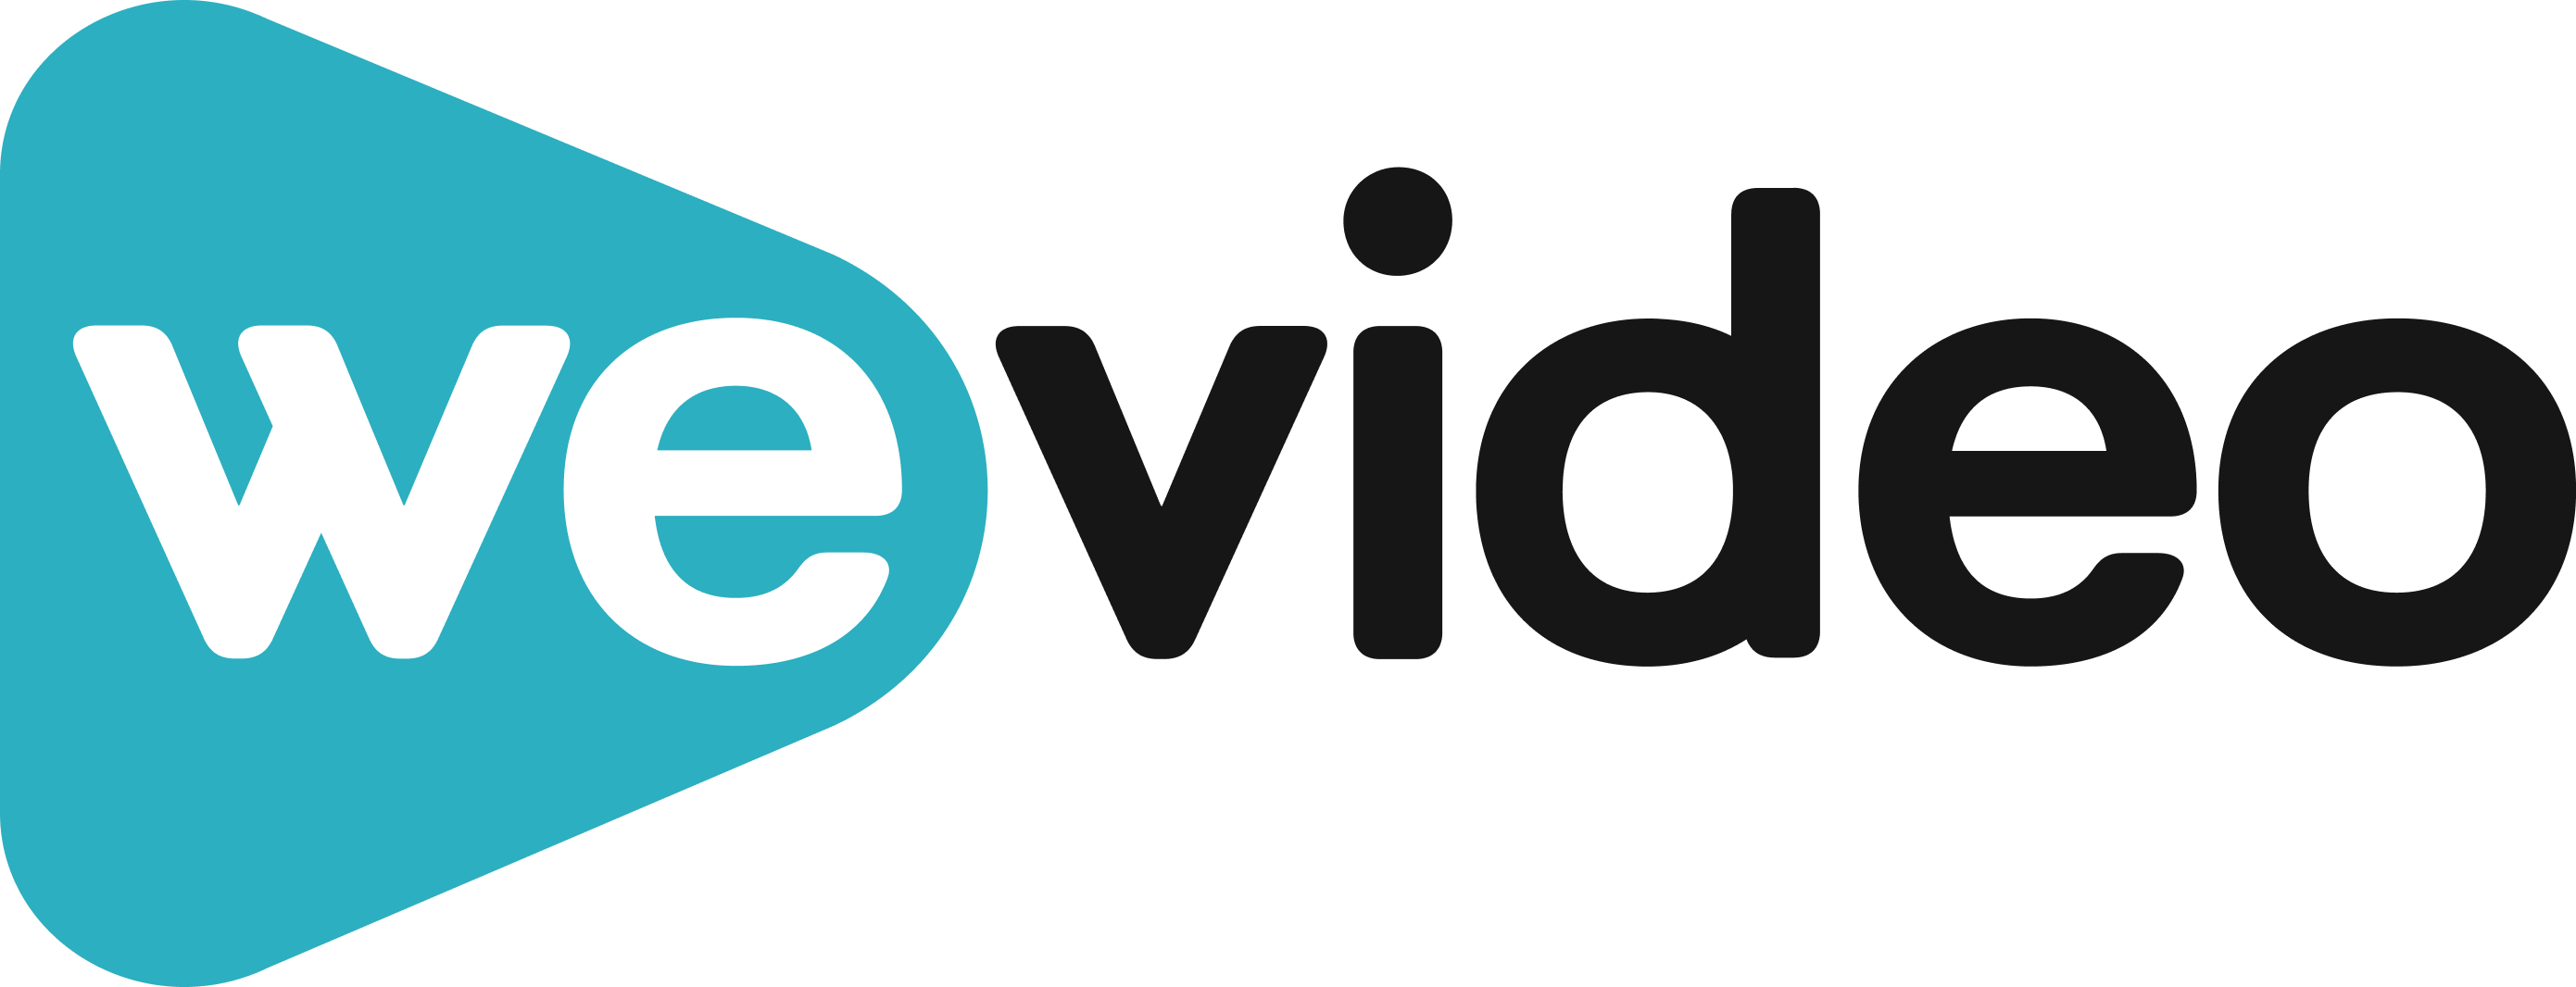 WeVideo Logo - flat